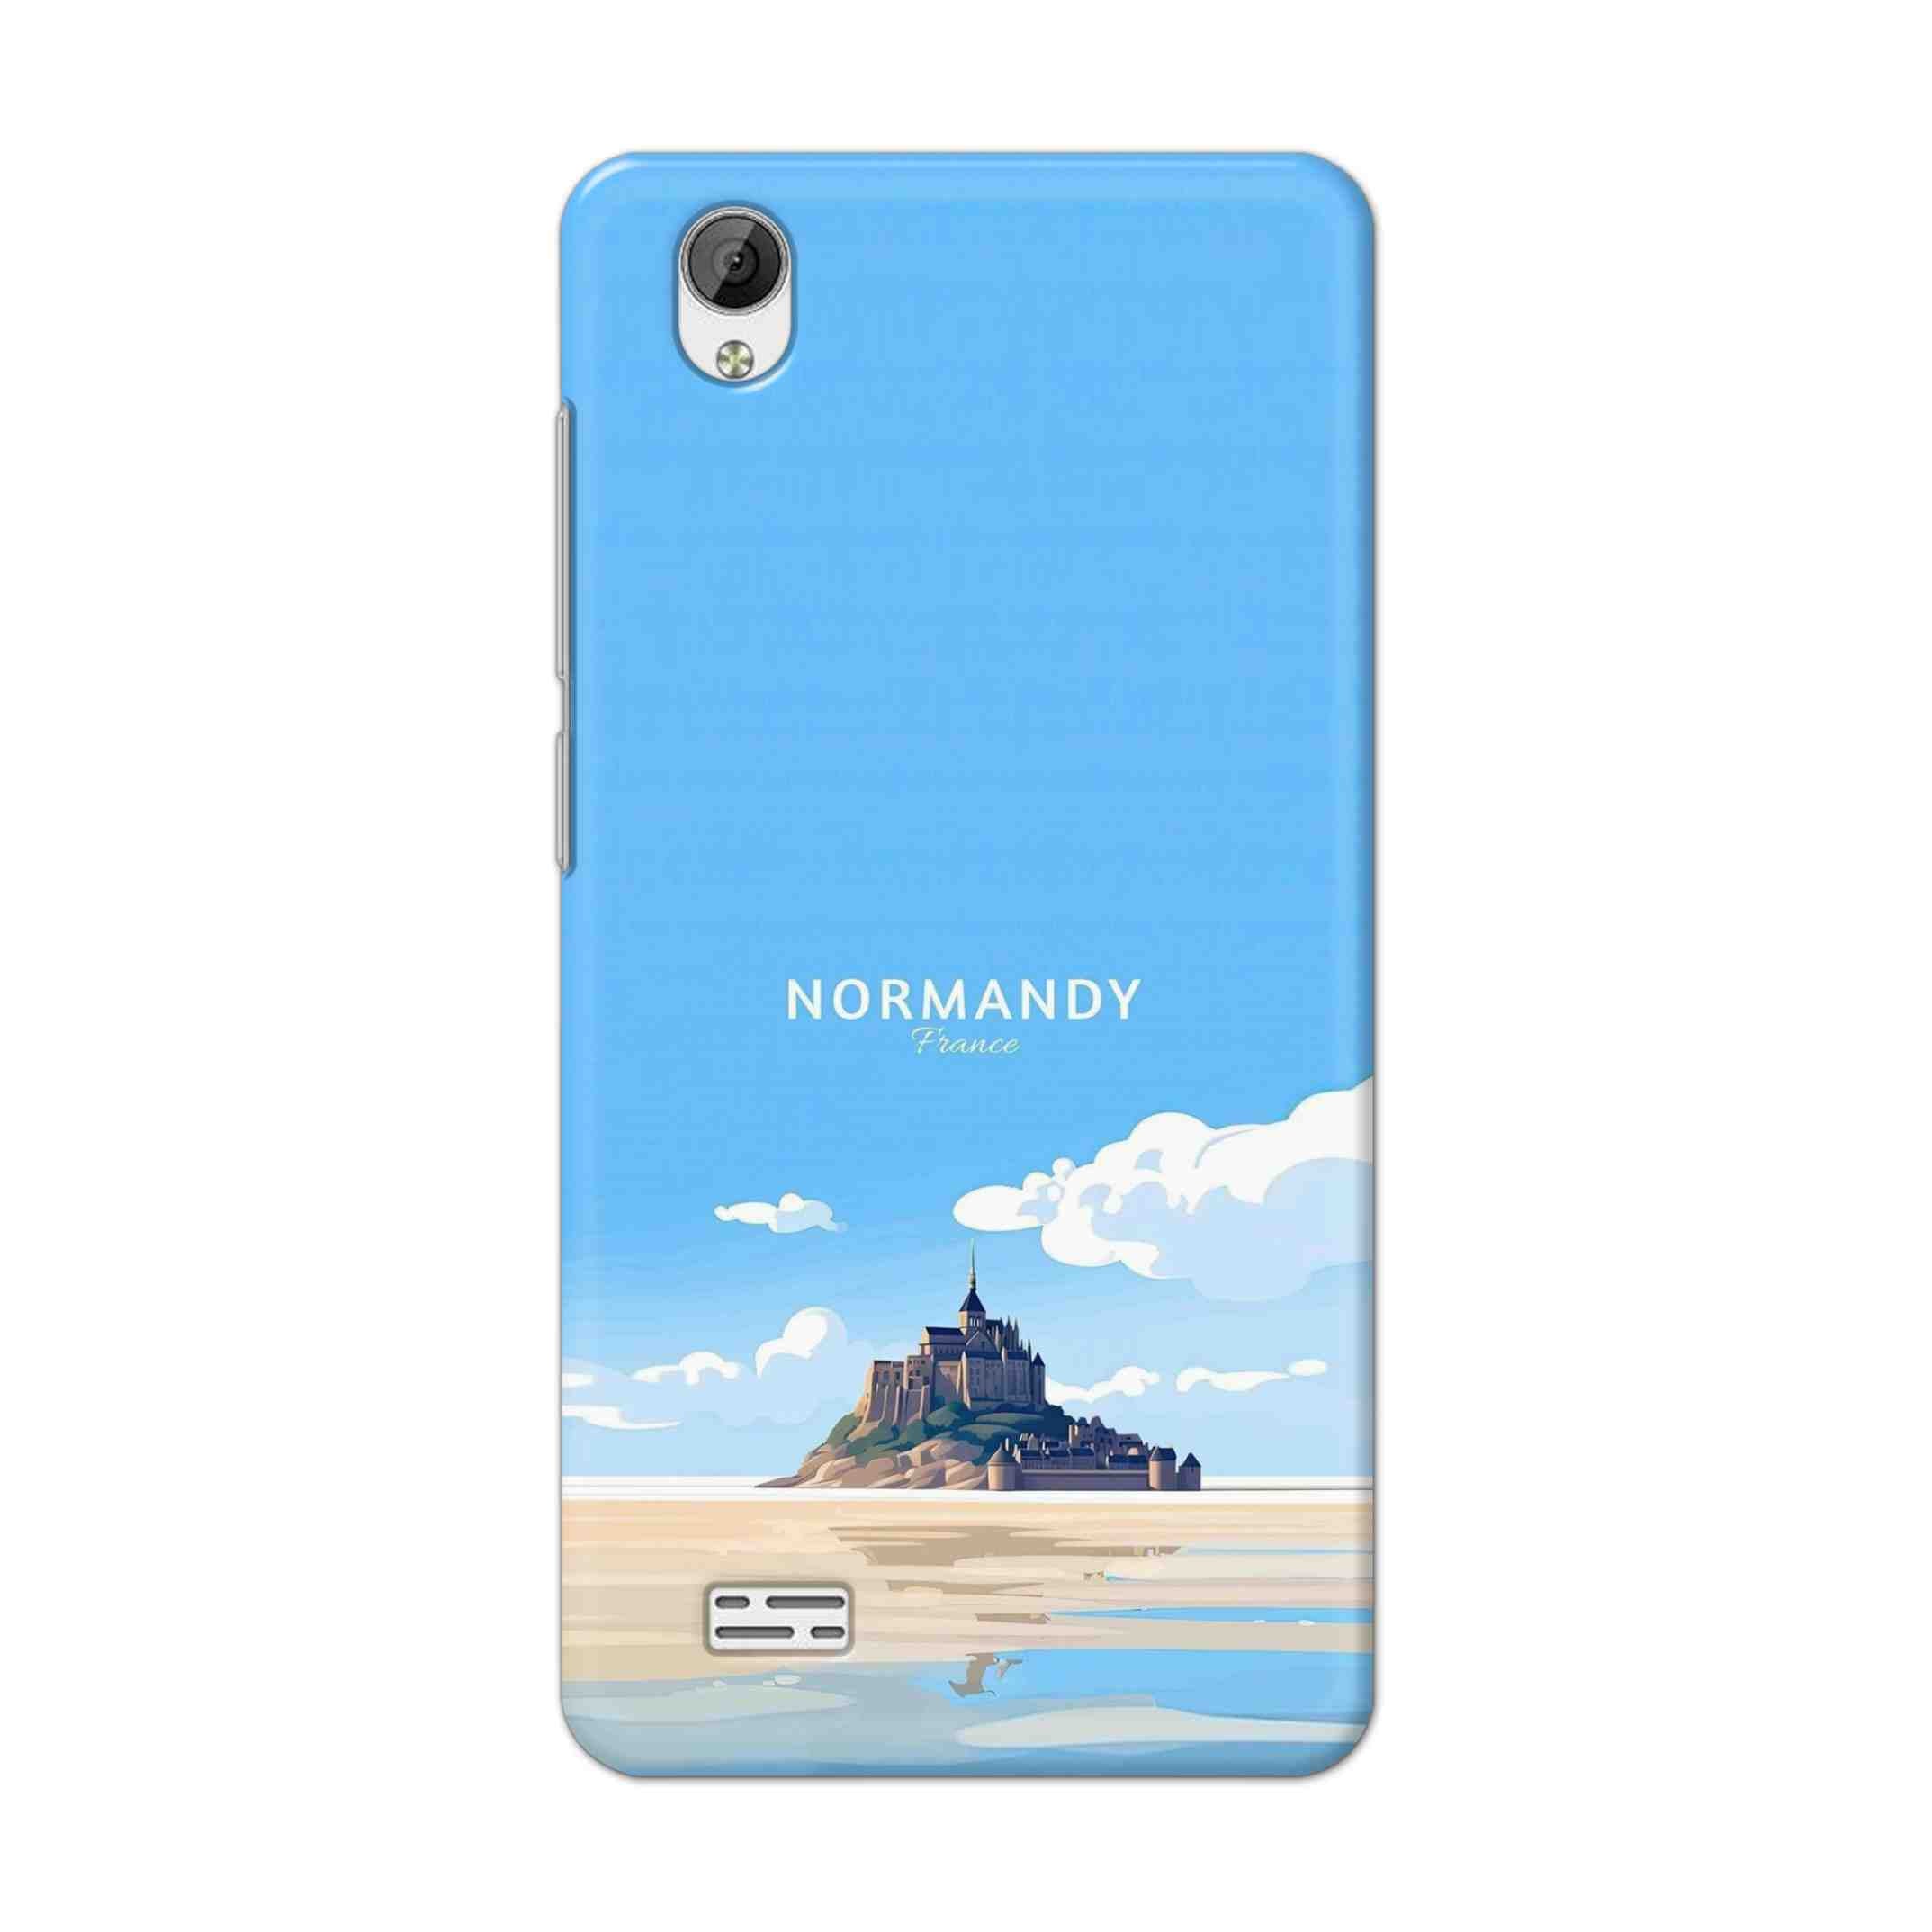 Buy Normandy Hard Back Mobile Phone Case Cover For Vivo Y31 Online